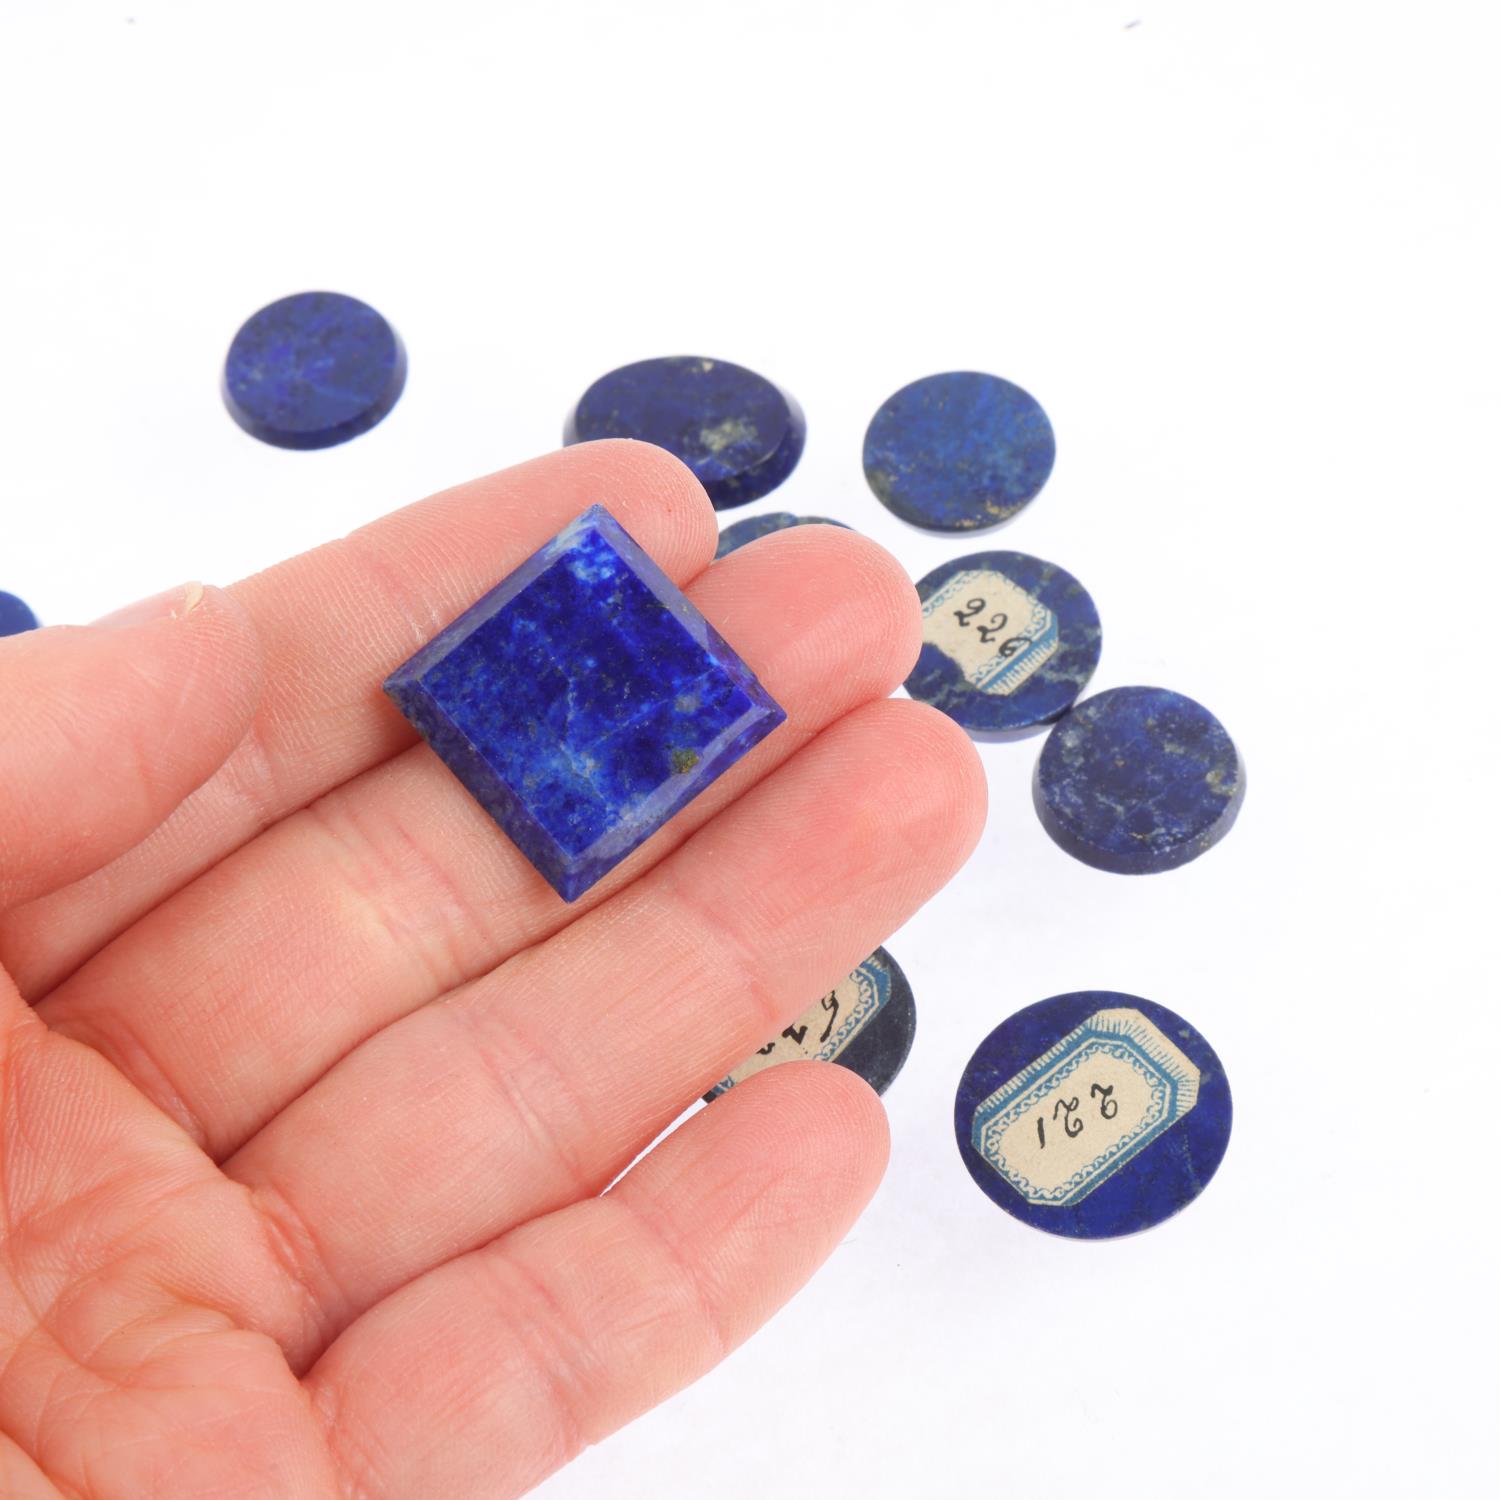 25 various lapis lazuli tablets, largest circle diameter 23.4mm A few have faint hairline cracks, - Image 4 of 4